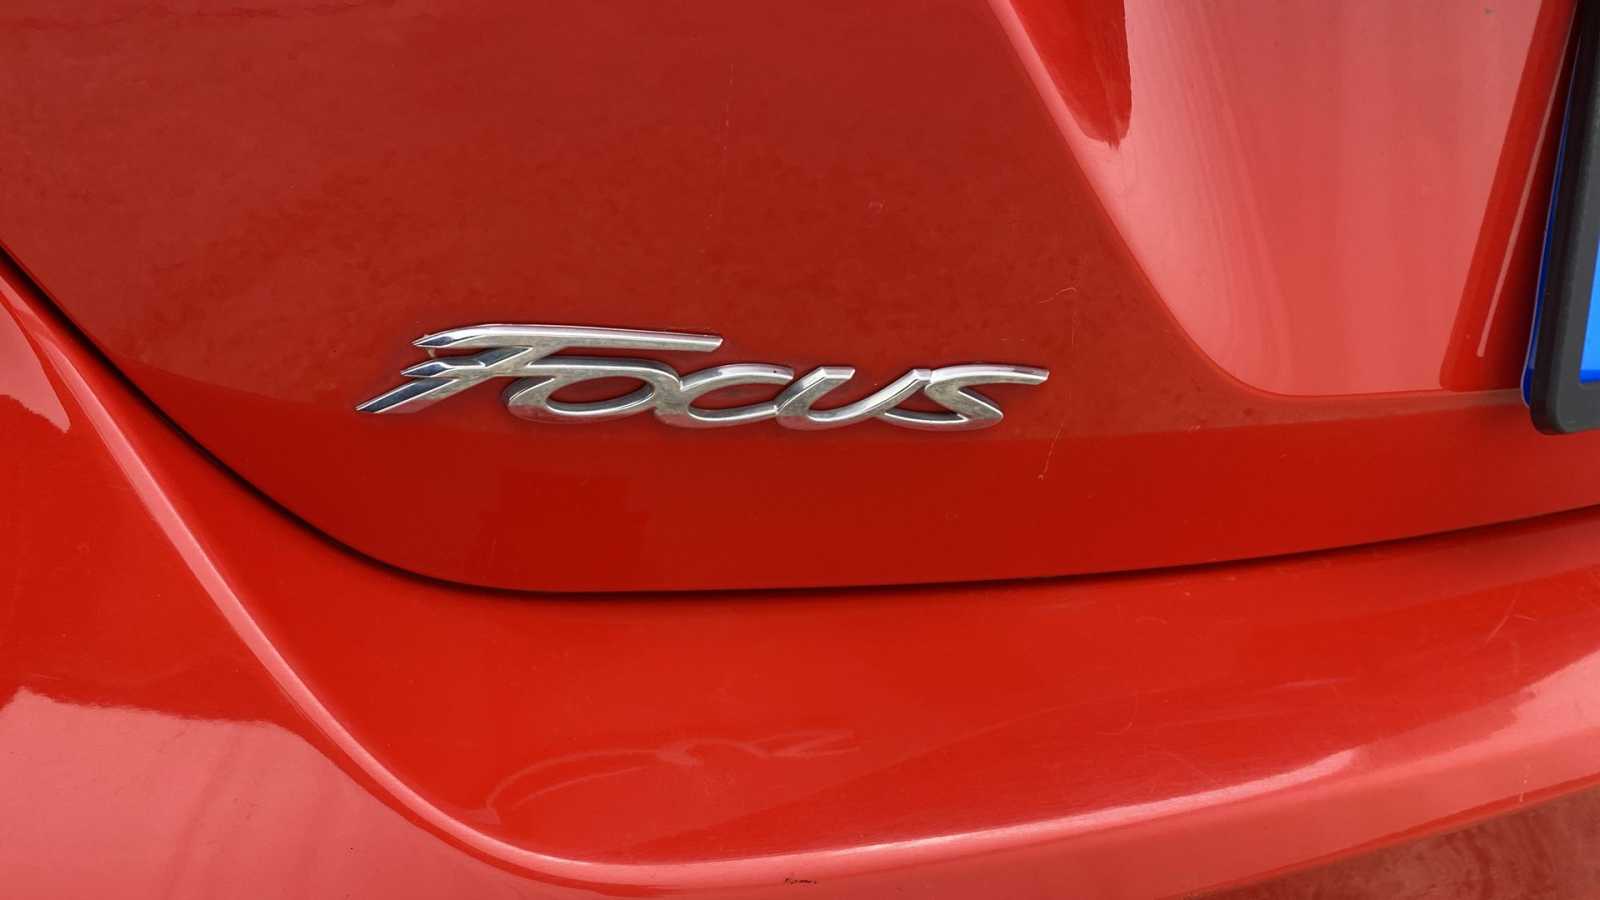 2014 Ford Focus SE 11